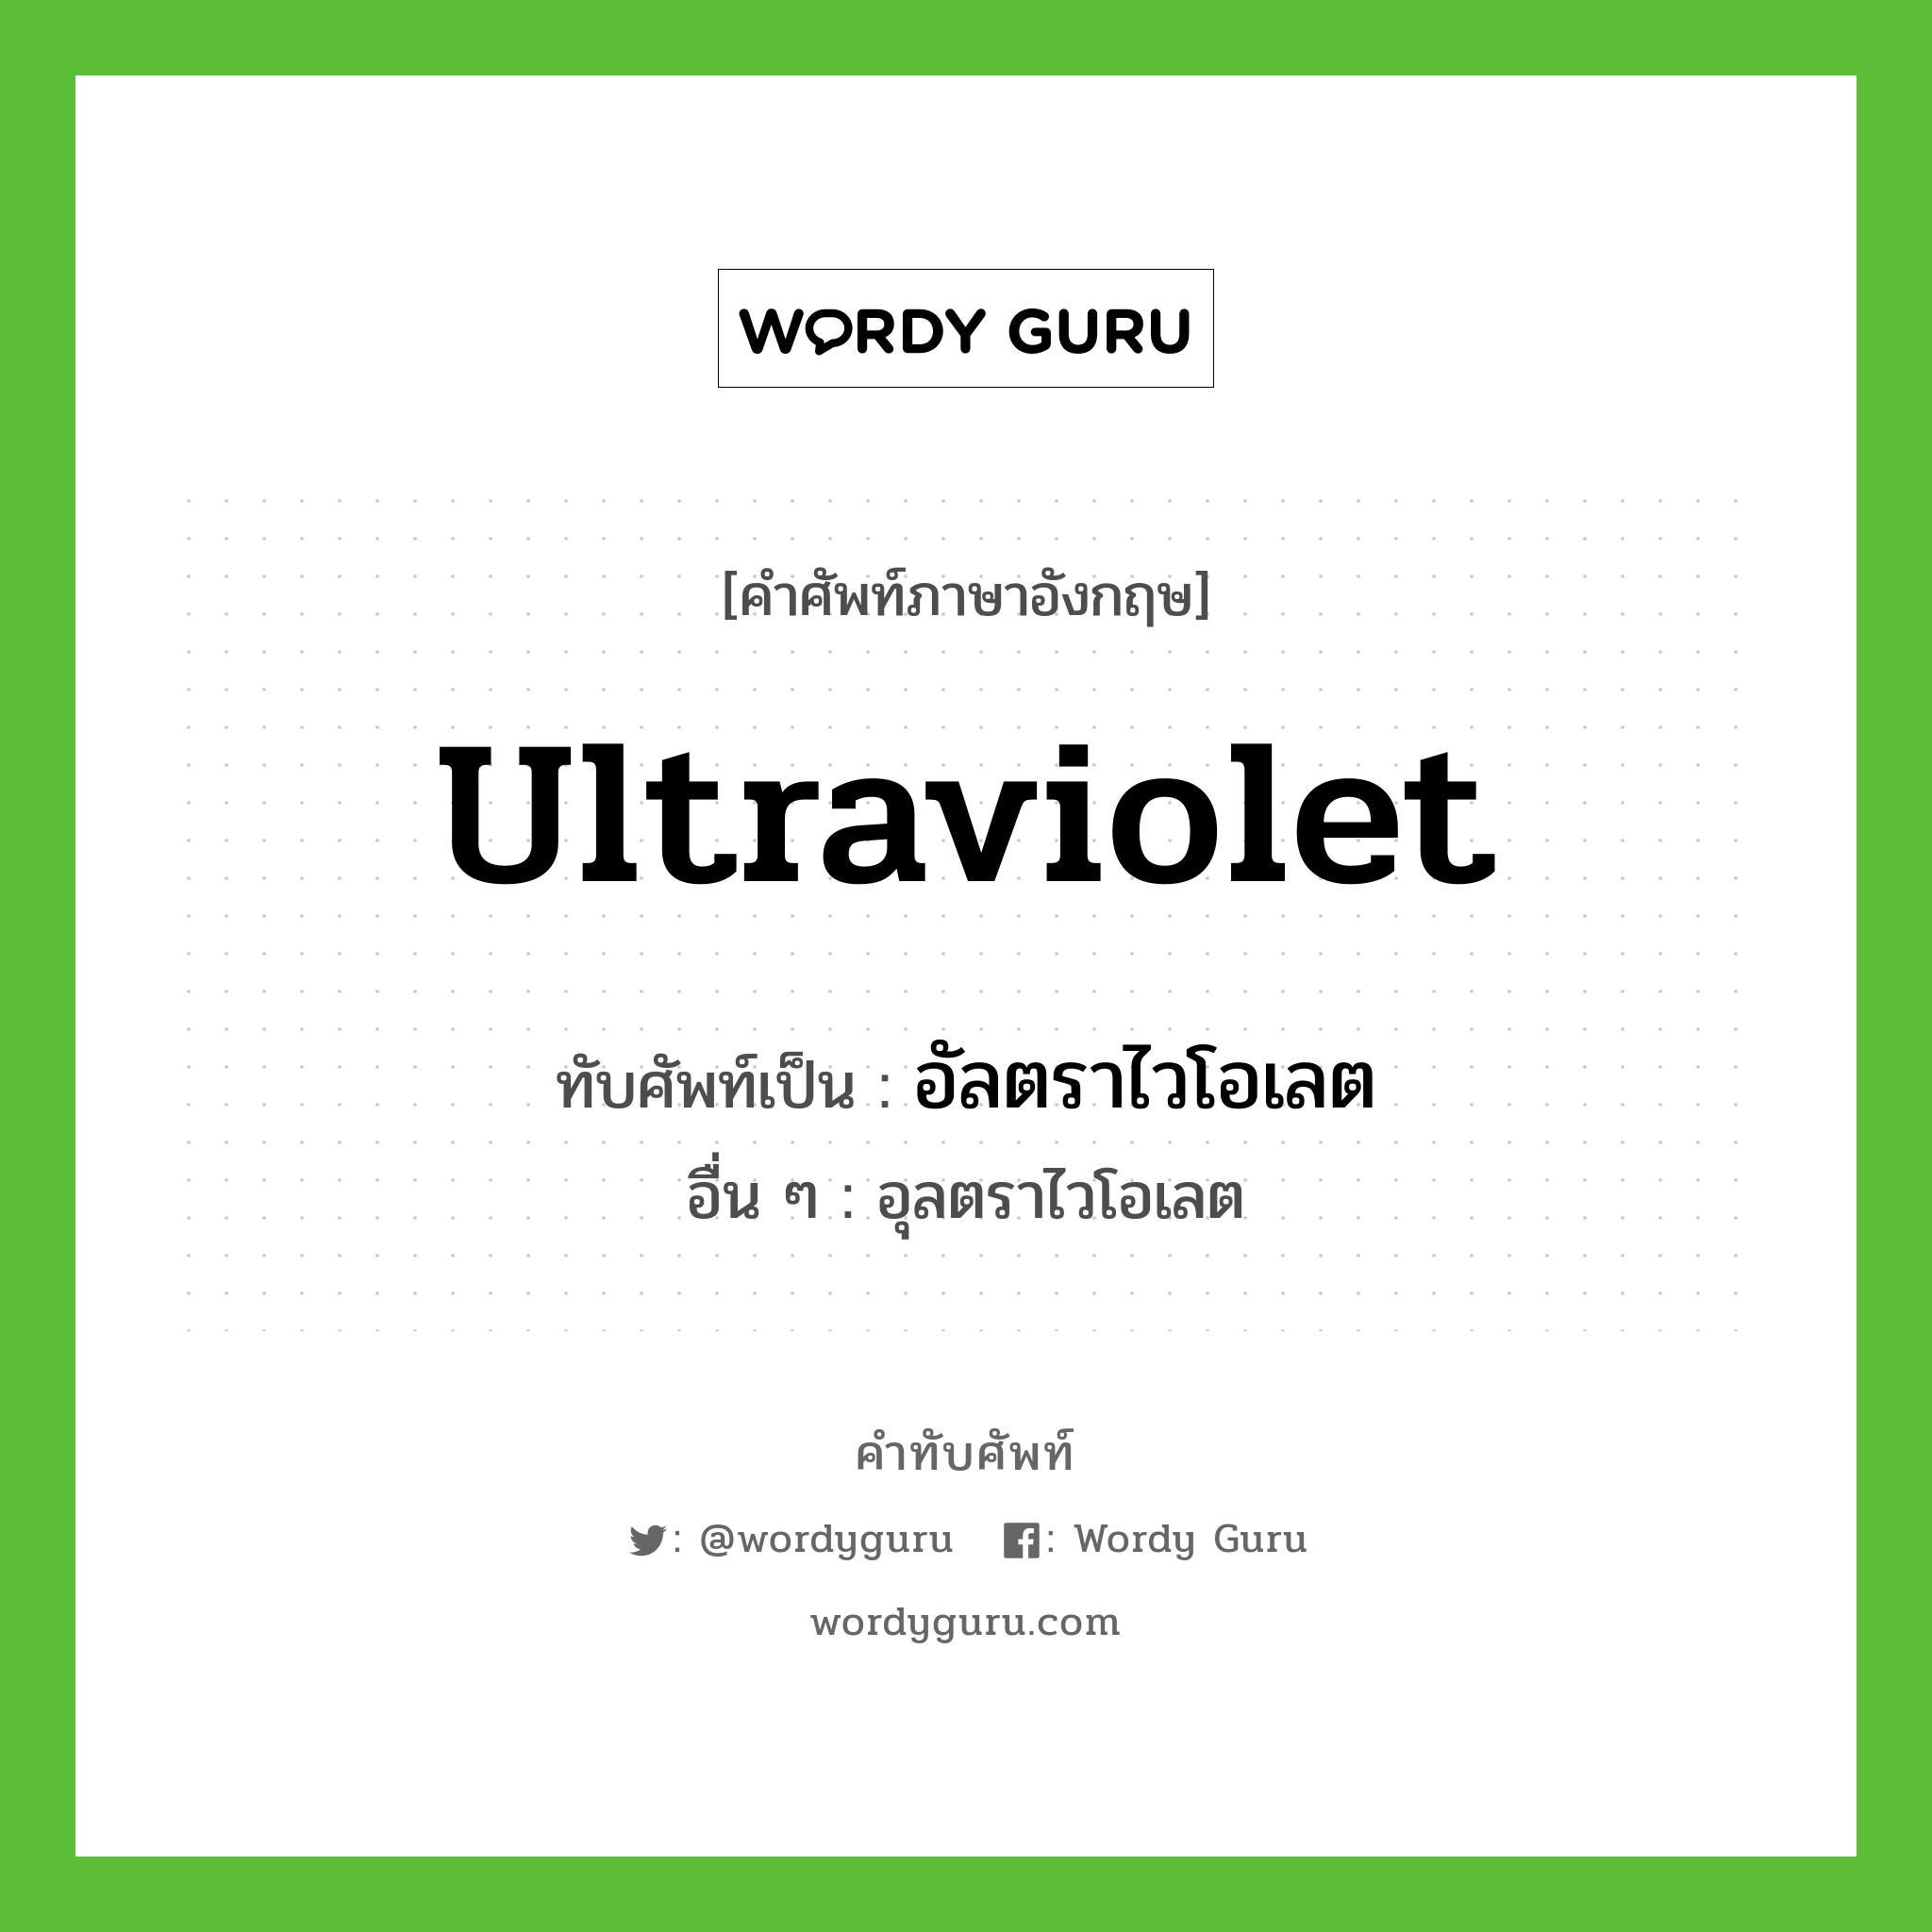 ultraviolet เขียนเป็นคำไทยว่าอะไร?, คำศัพท์ภาษาอังกฤษ ultraviolet ทับศัพท์เป็น อัลตราไวโอเลต อื่น ๆ อุลตราไวโอเลต